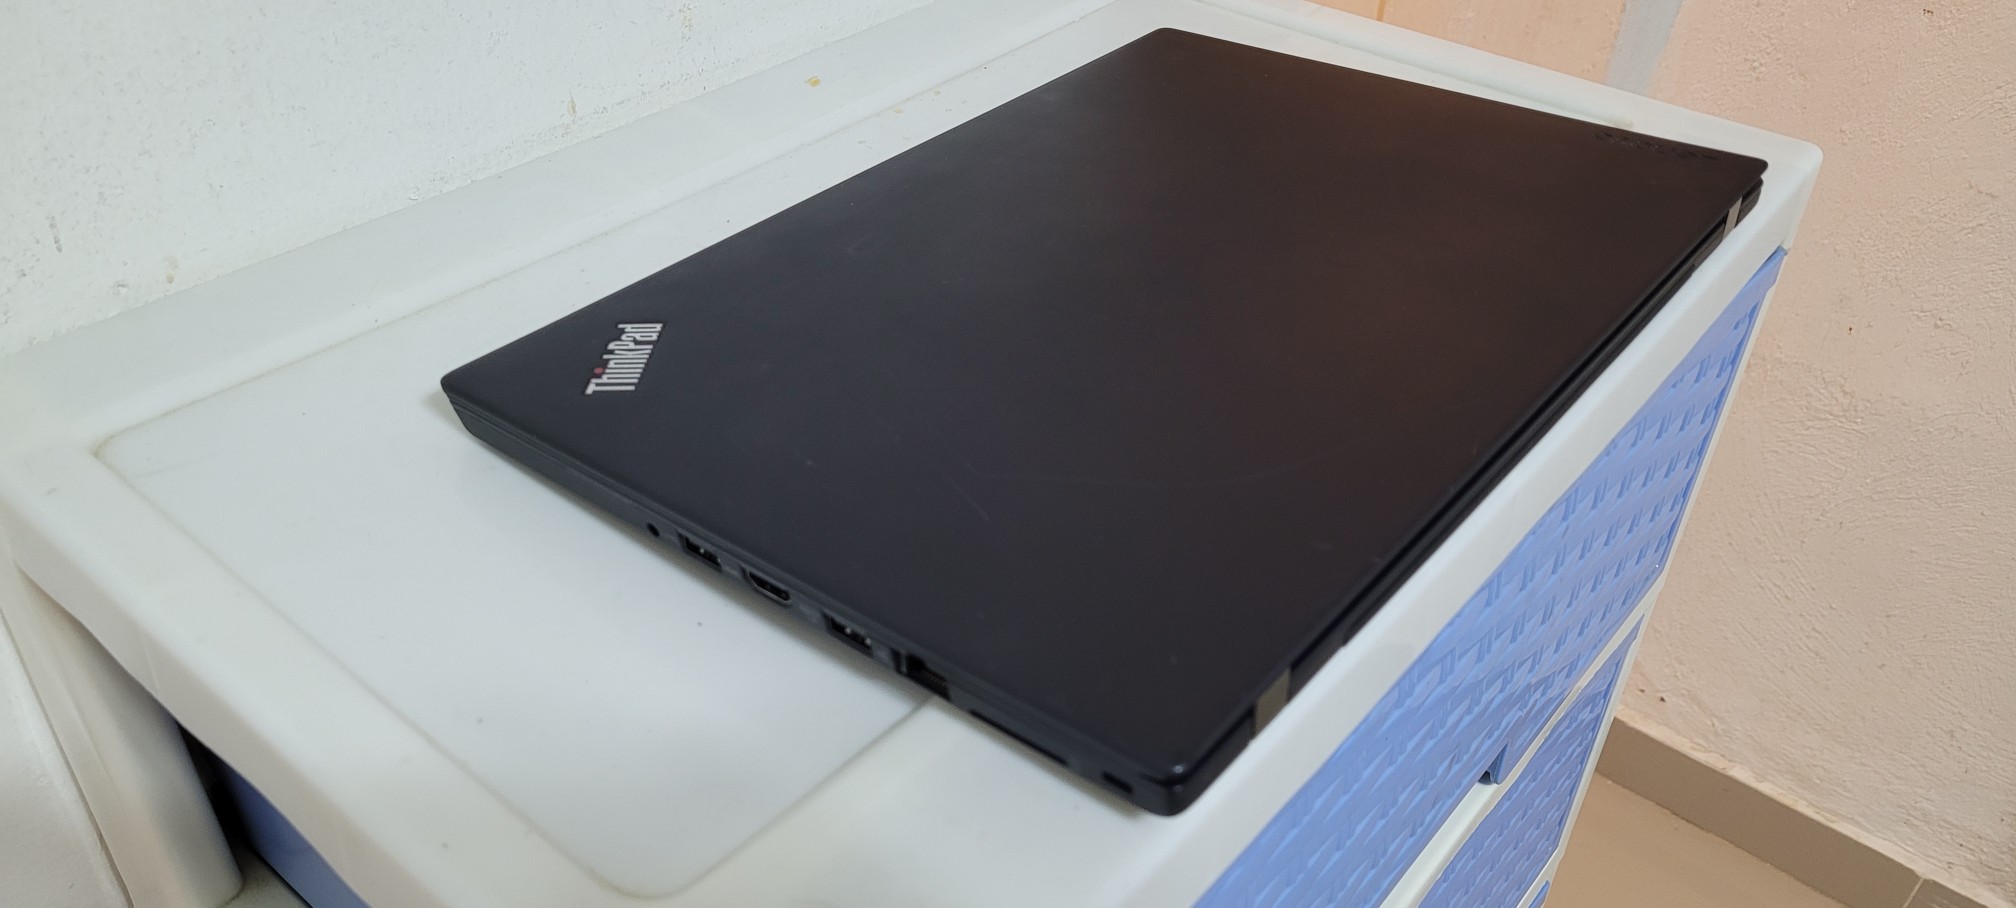 computadoras y laptops - Lenovo Slim t470 14 Pulg Core i7 7ma Gen Ram 8gb ddr4 Disco 256gb SSD Solido 2